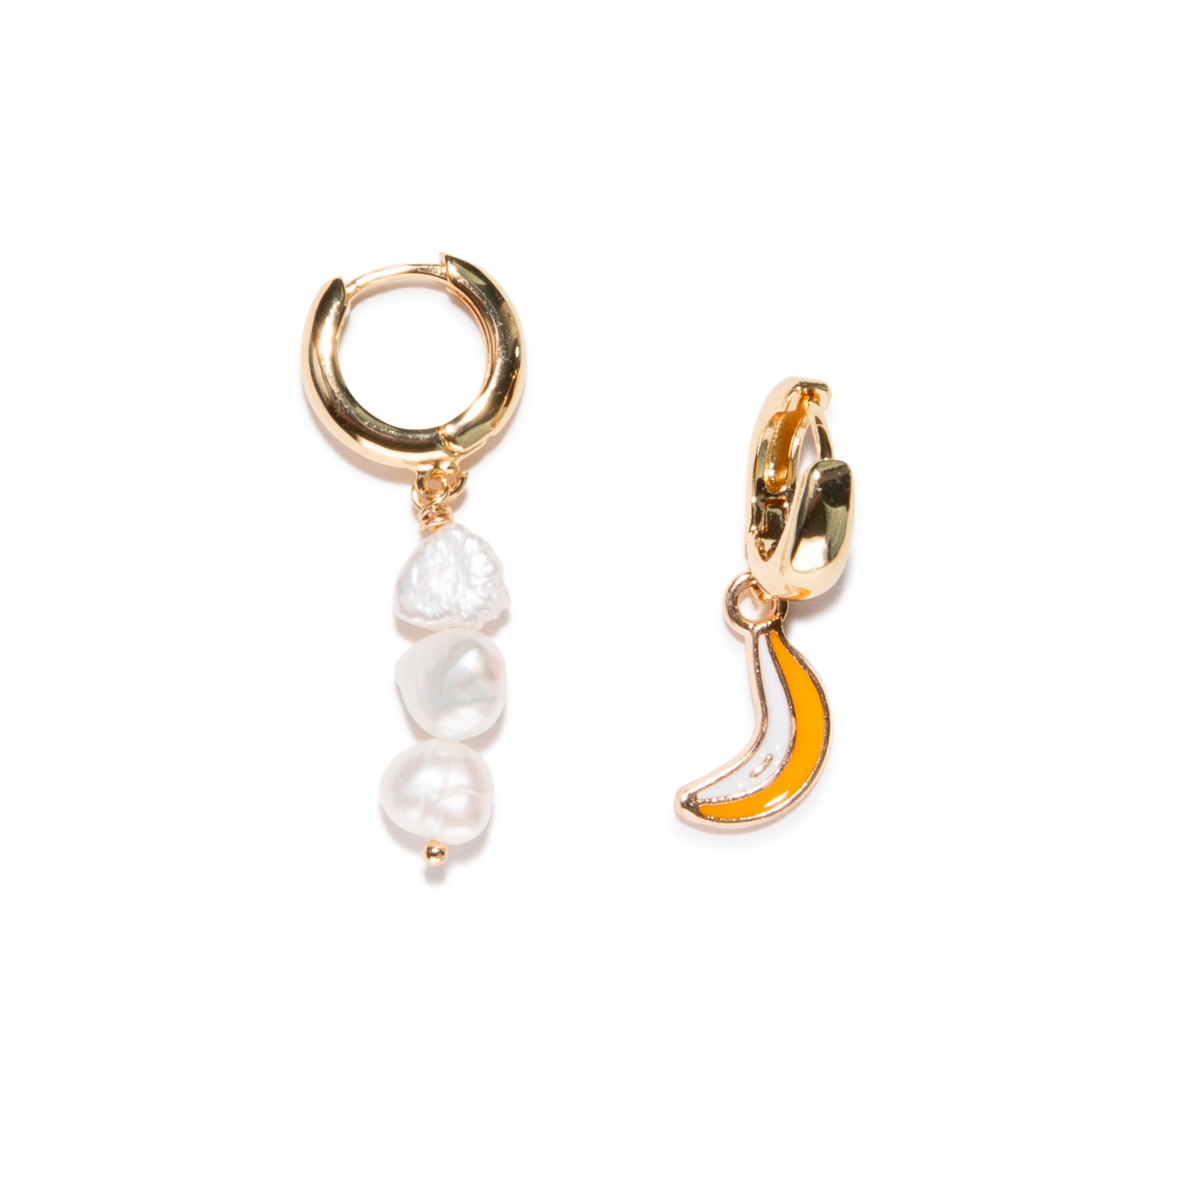 18k Gold Plated Huggies Freshwater Pearls with a Yellow Enamel Banana Charm - Nana Banana Earrings For Women - Yellow